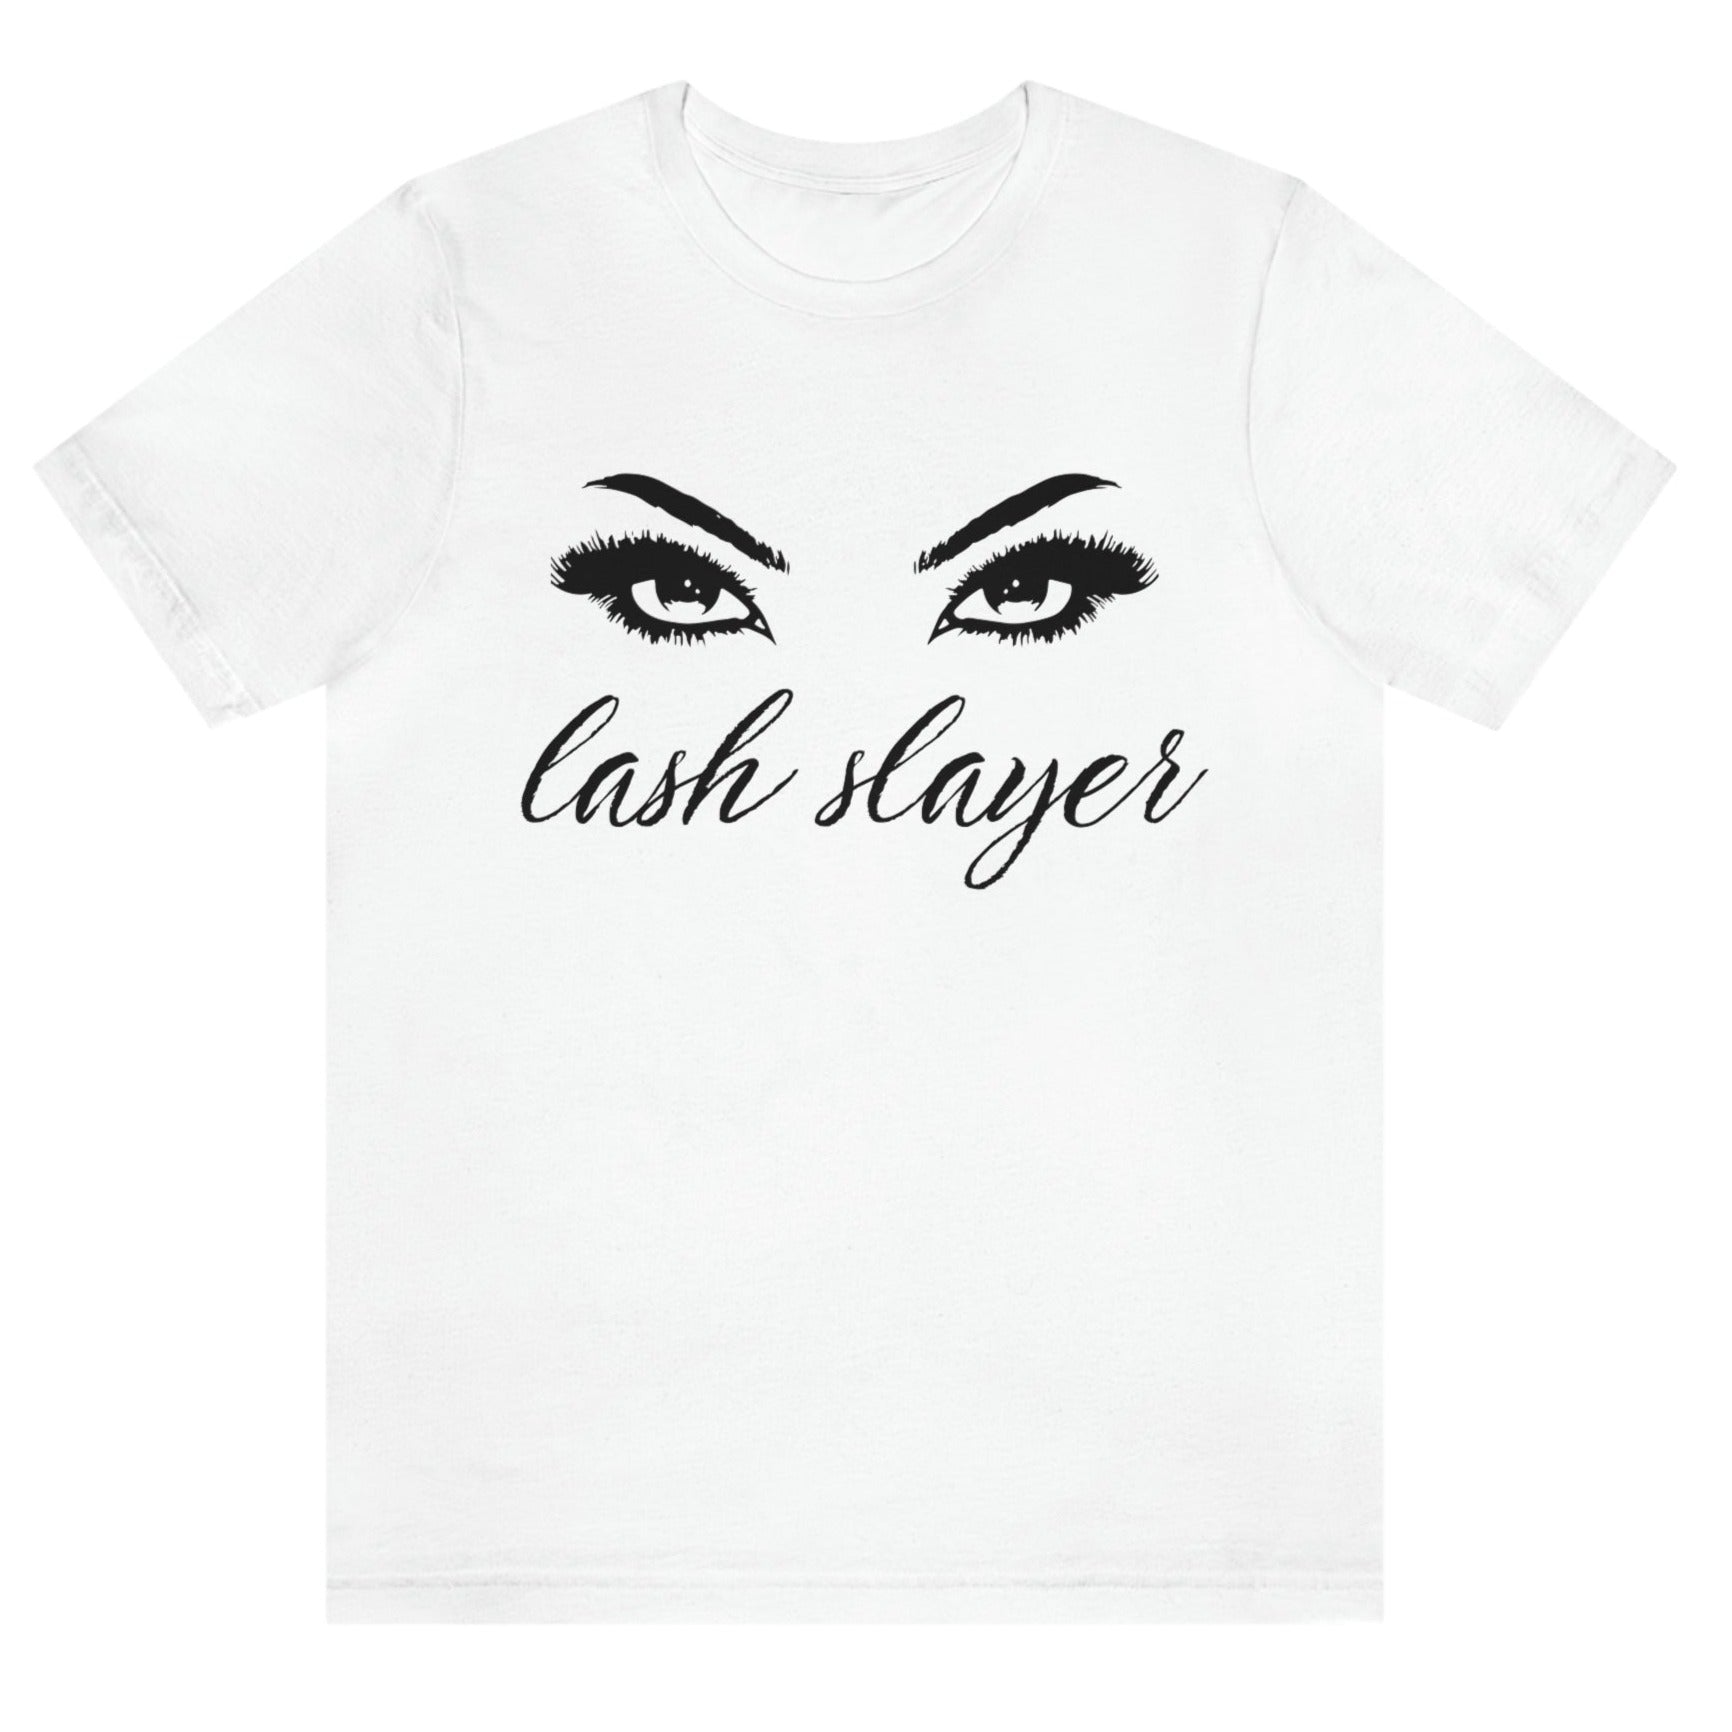 lash-slayer-white-t-shirt-womens-fashion